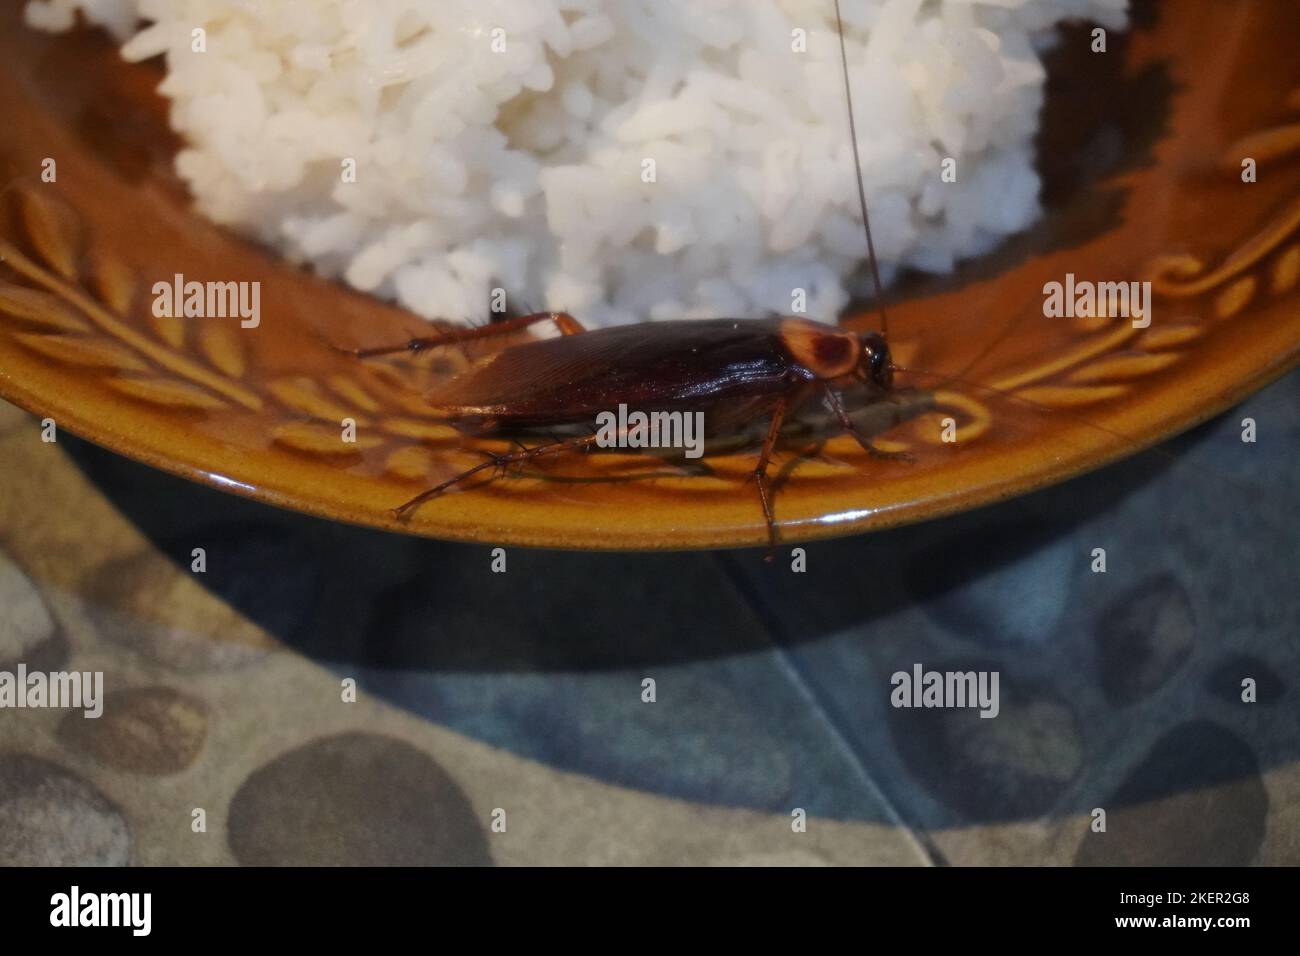 Kakerlake auf einem Reisteller. Kreuzkontamination Lebensmittel, die Krankheit Diarrhöe Stockfoto